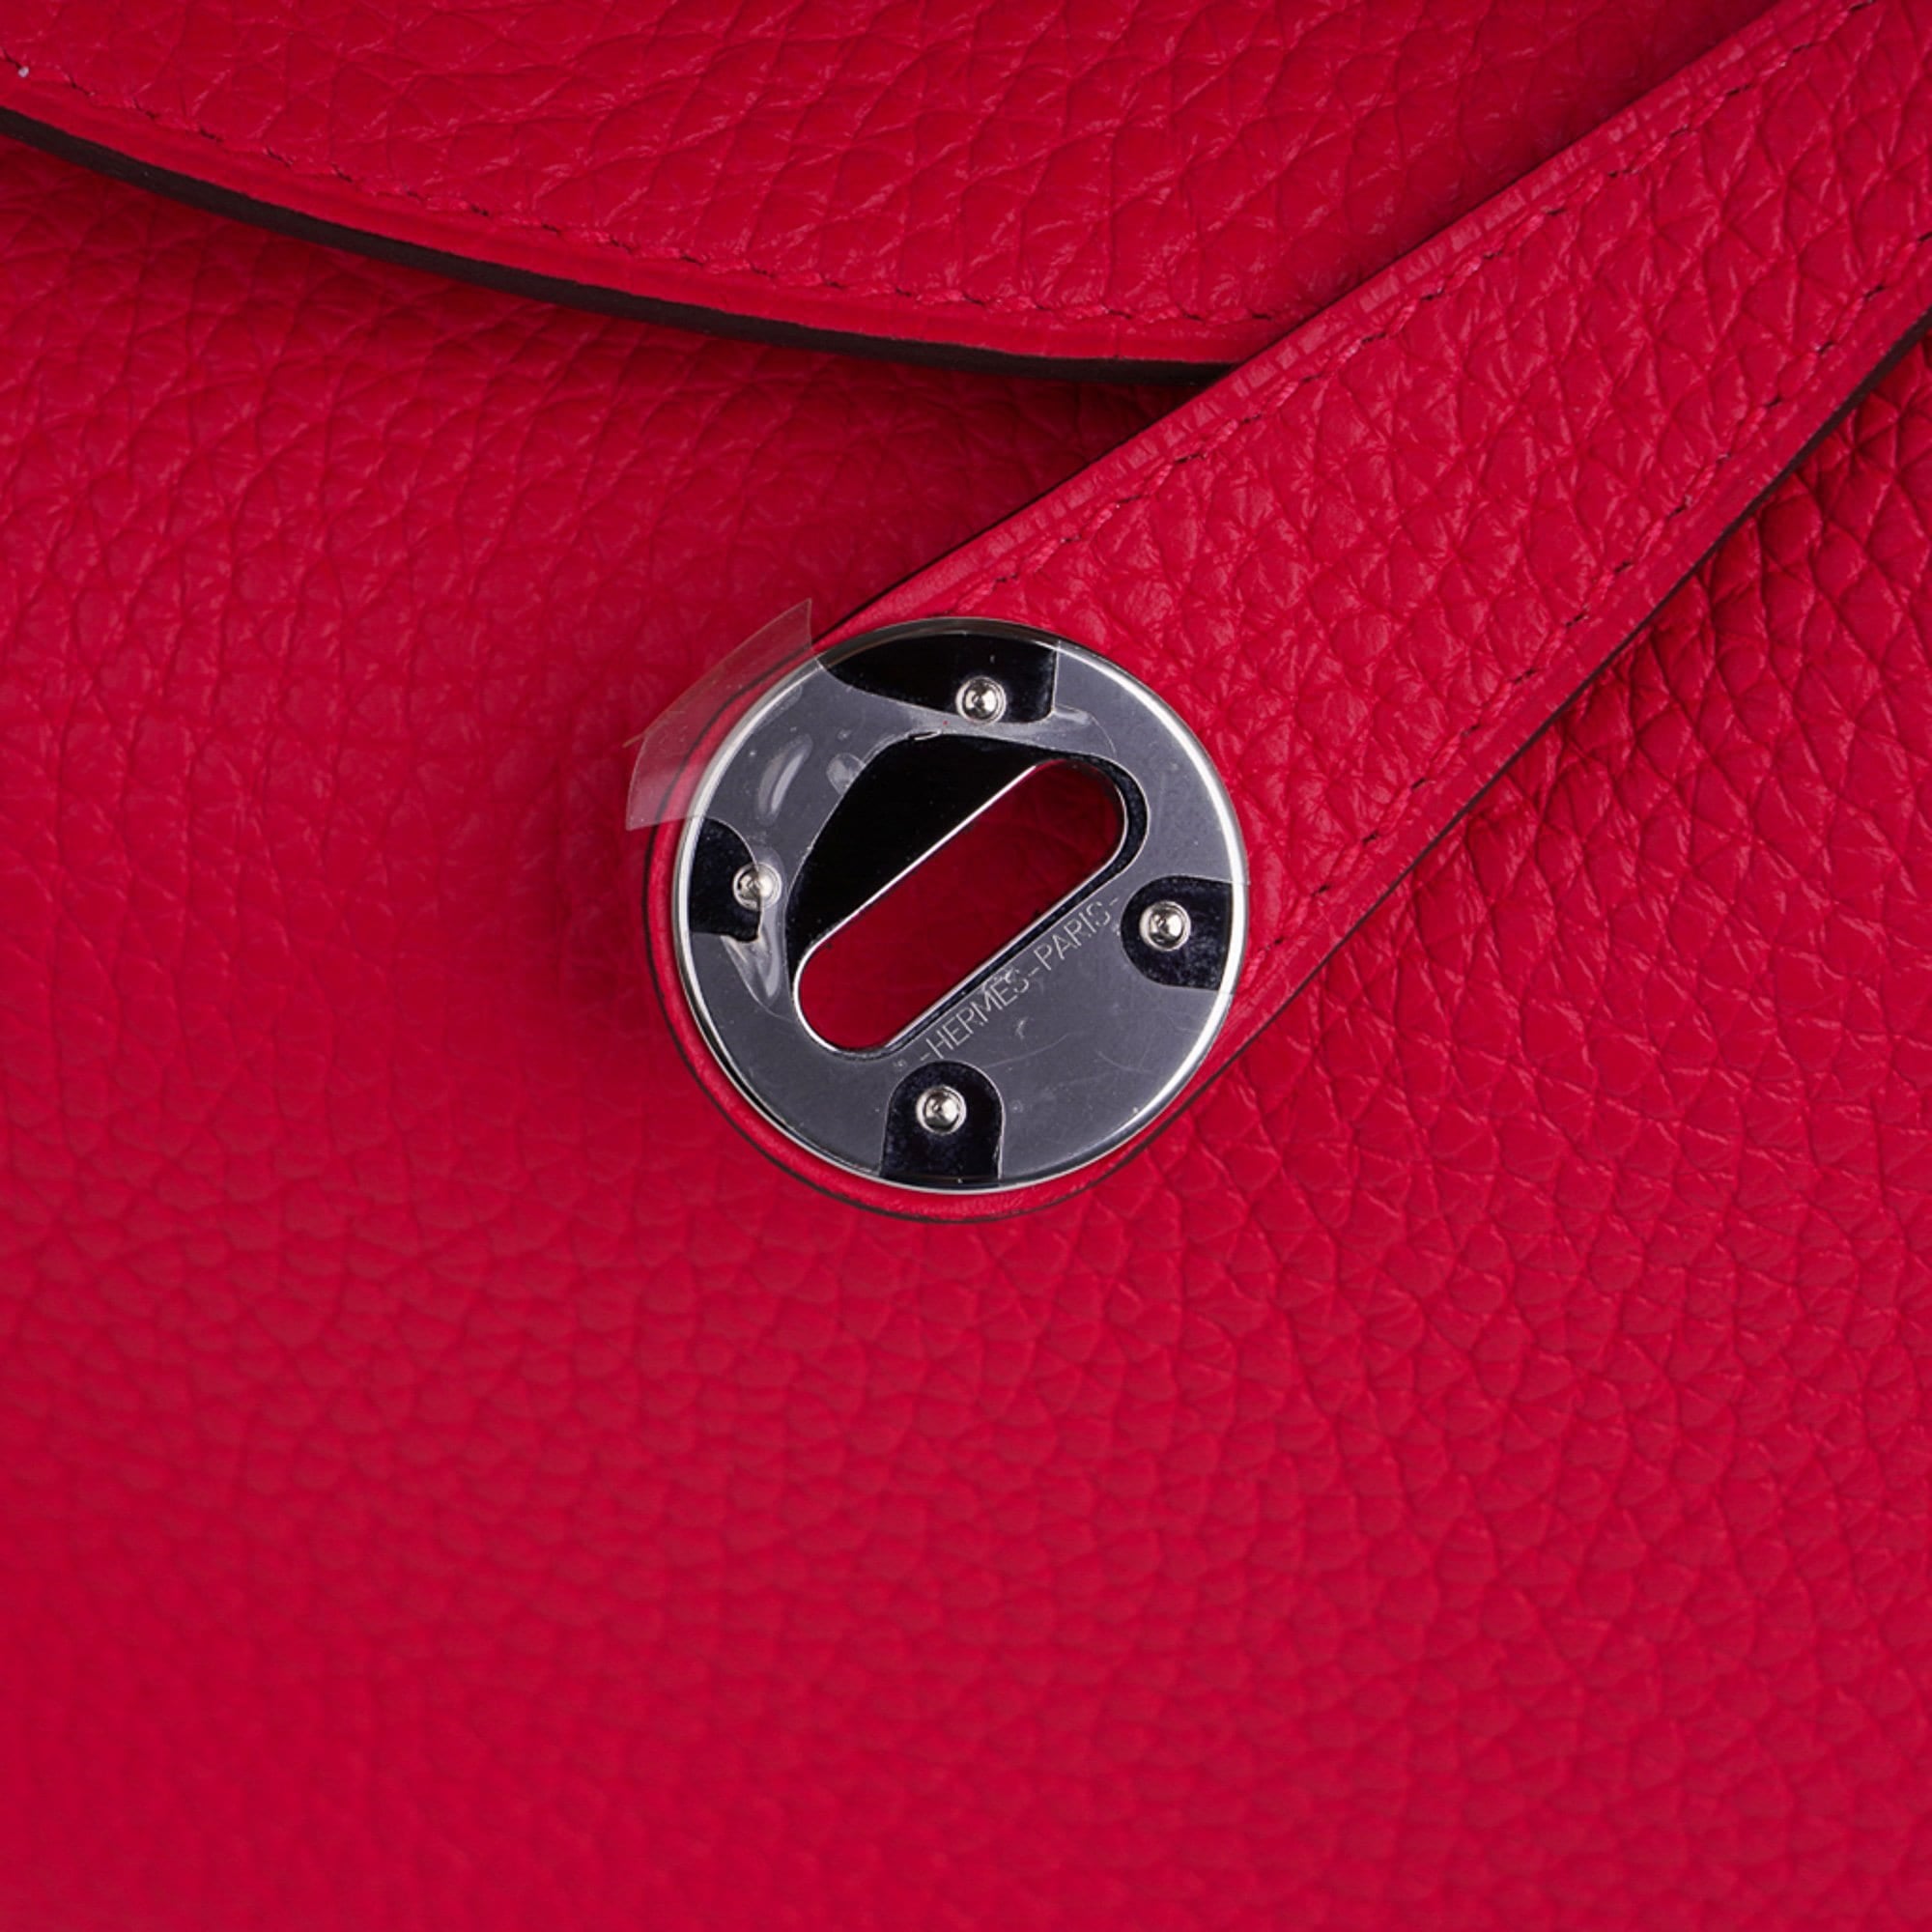 Hermès Mini Lindy 20 Rose Extreme Clemence Leather Palladium Hardware Bag